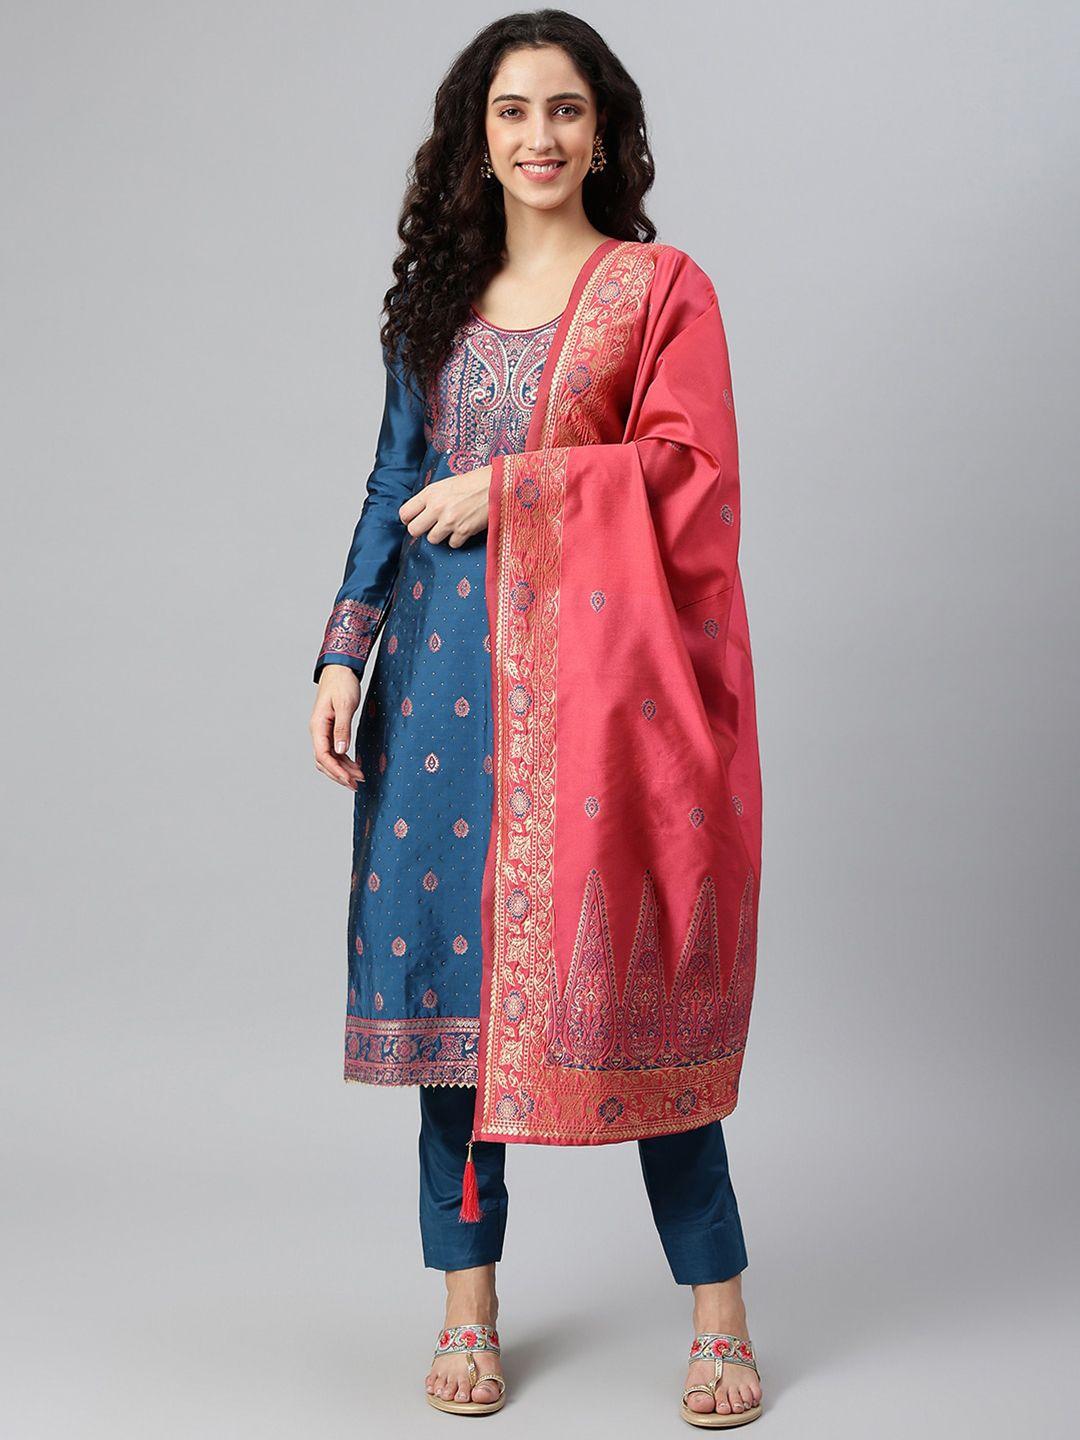 lilots blue & pink  banarasi jacquard woven unstitched dress material